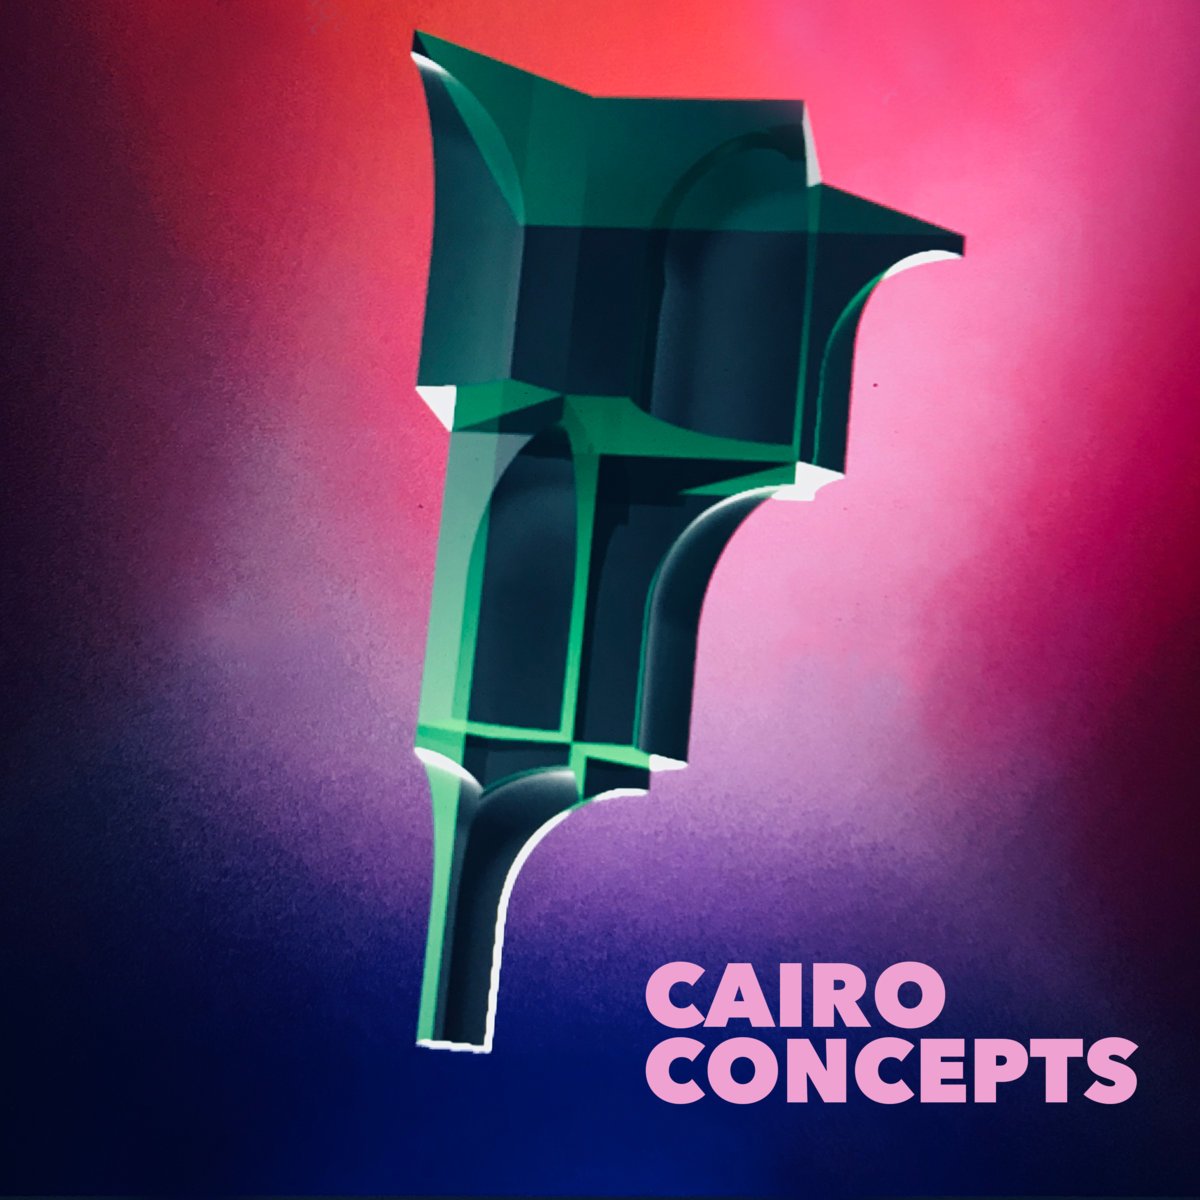 كايرو كونسبتس فل بطيخ معازف ma3azef Cairo Concepts